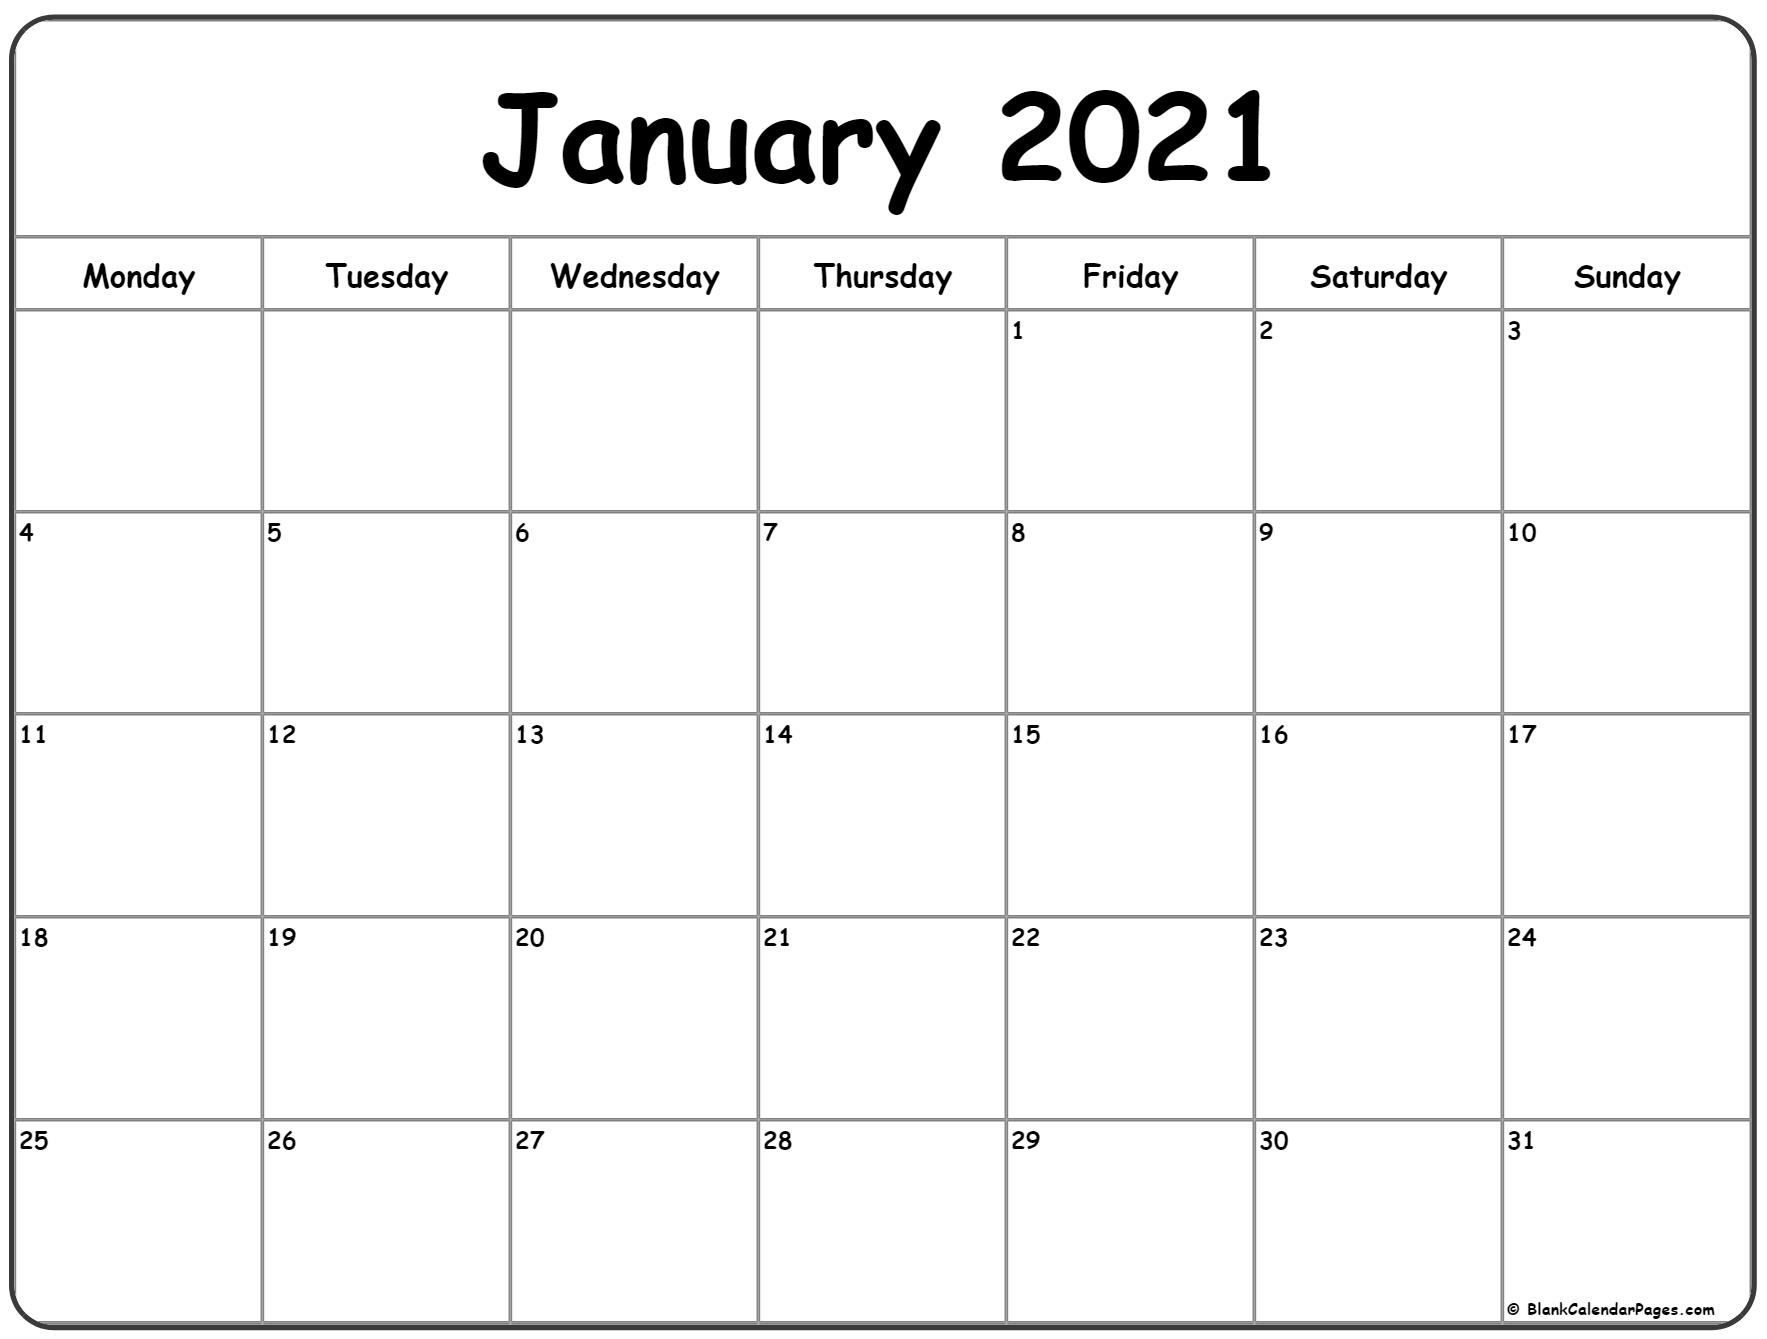 Catch December 2021 Starts Monday